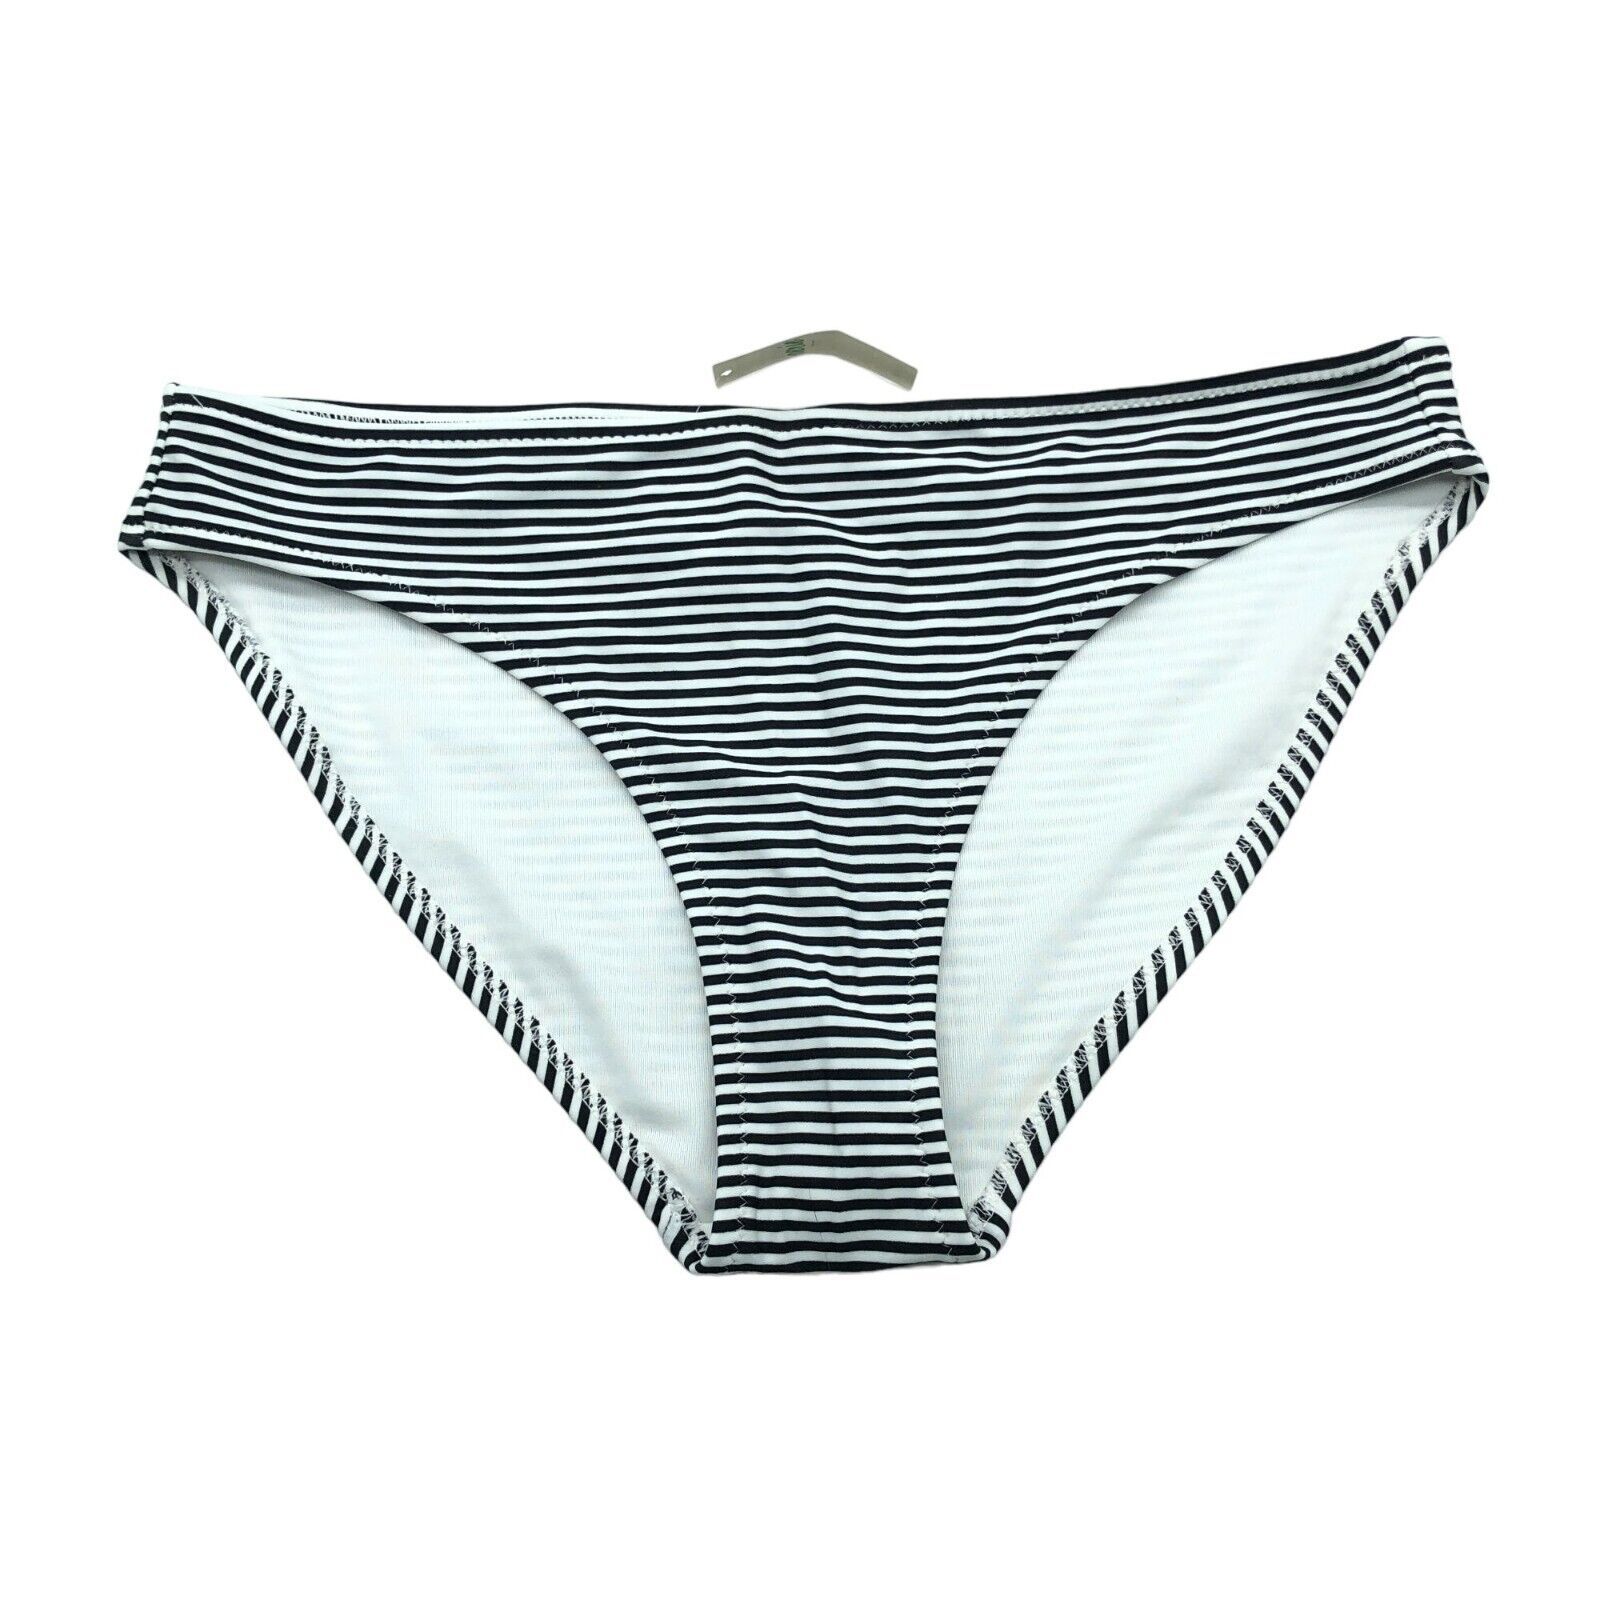 Primary image for Aerie Womens Bikini Bottom Brief Striped Black White S